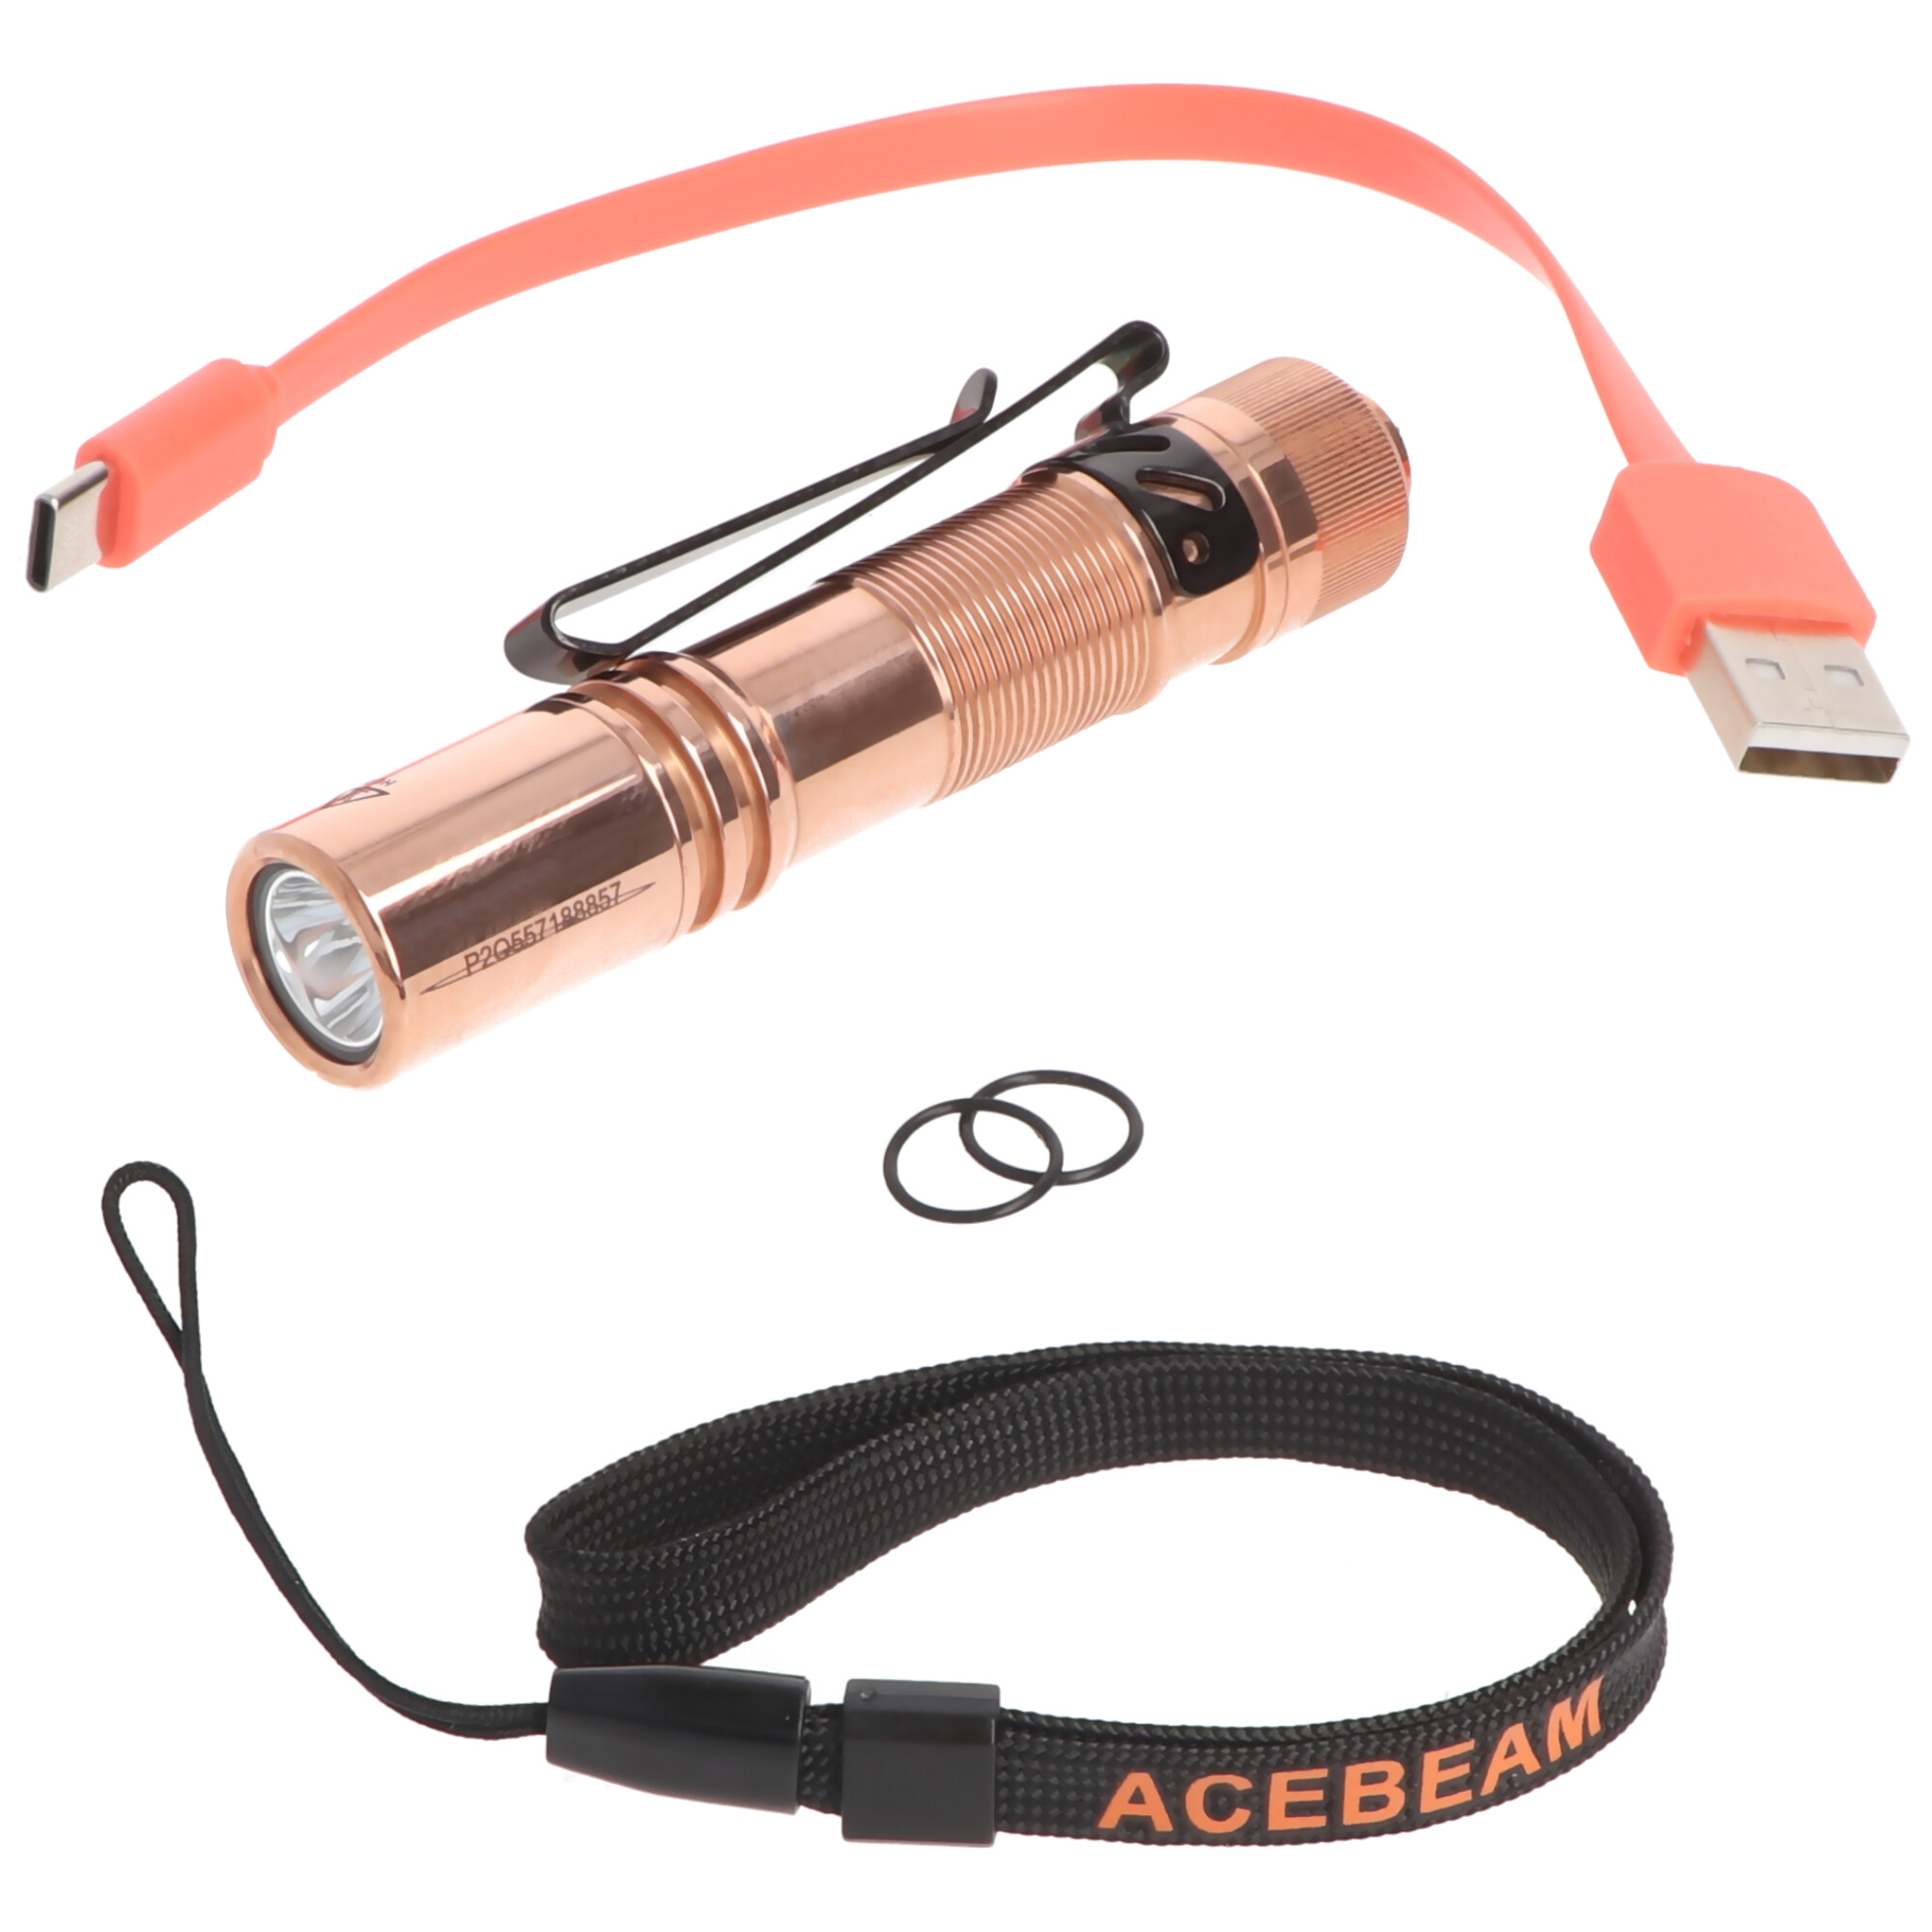 AceBeam Pokelit AA LED-Taschenlampe in Kupfer, 500 Lumen, inklusive 14500 Li-Ion 920mAh Akku mit USB-C Anschluss